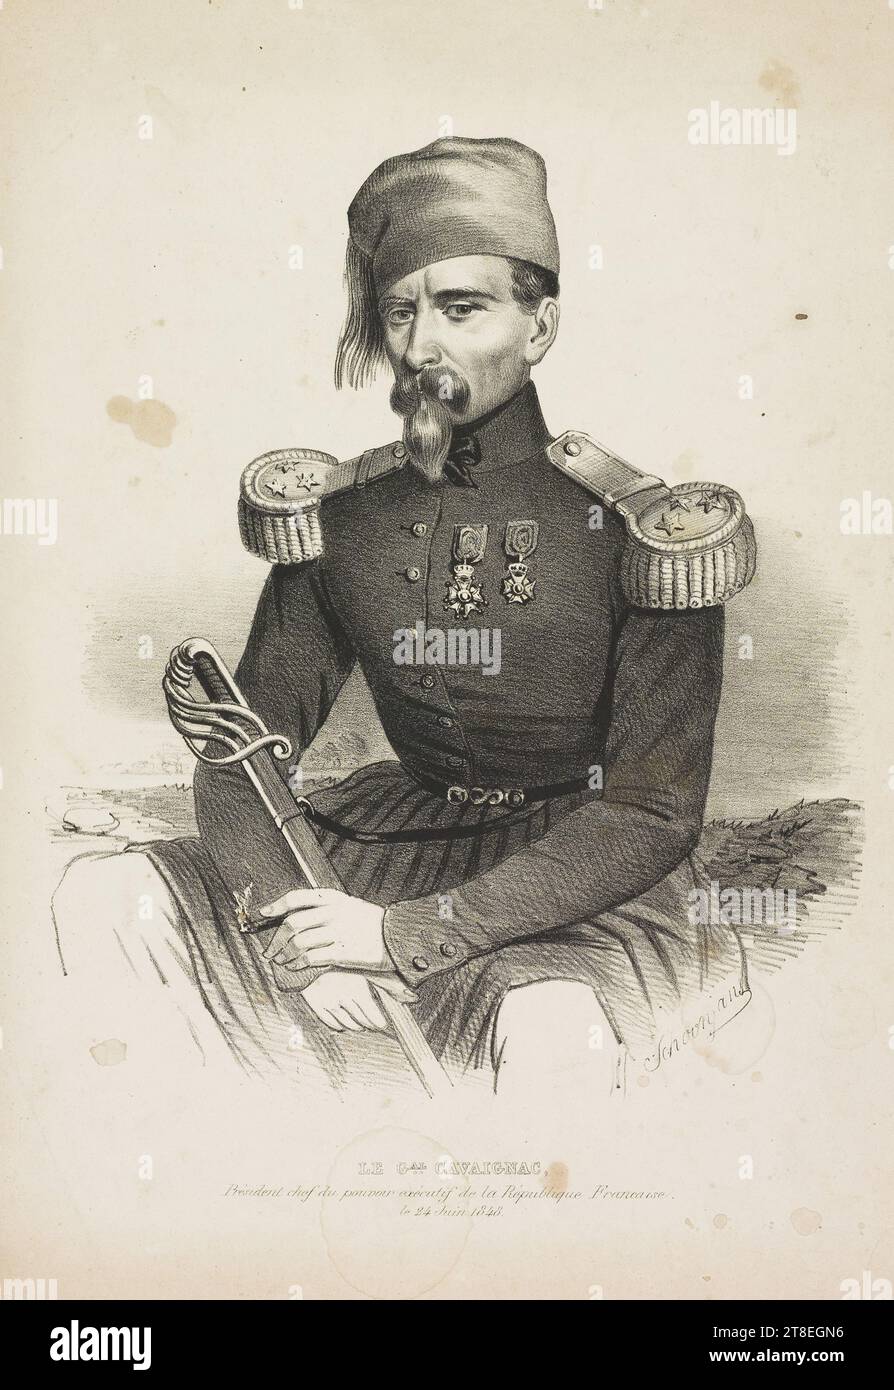 Schoonjans. GAL. CAVAIGNAC, President head of the executive power of the French Republic. June 24, 1848 Stock Photo